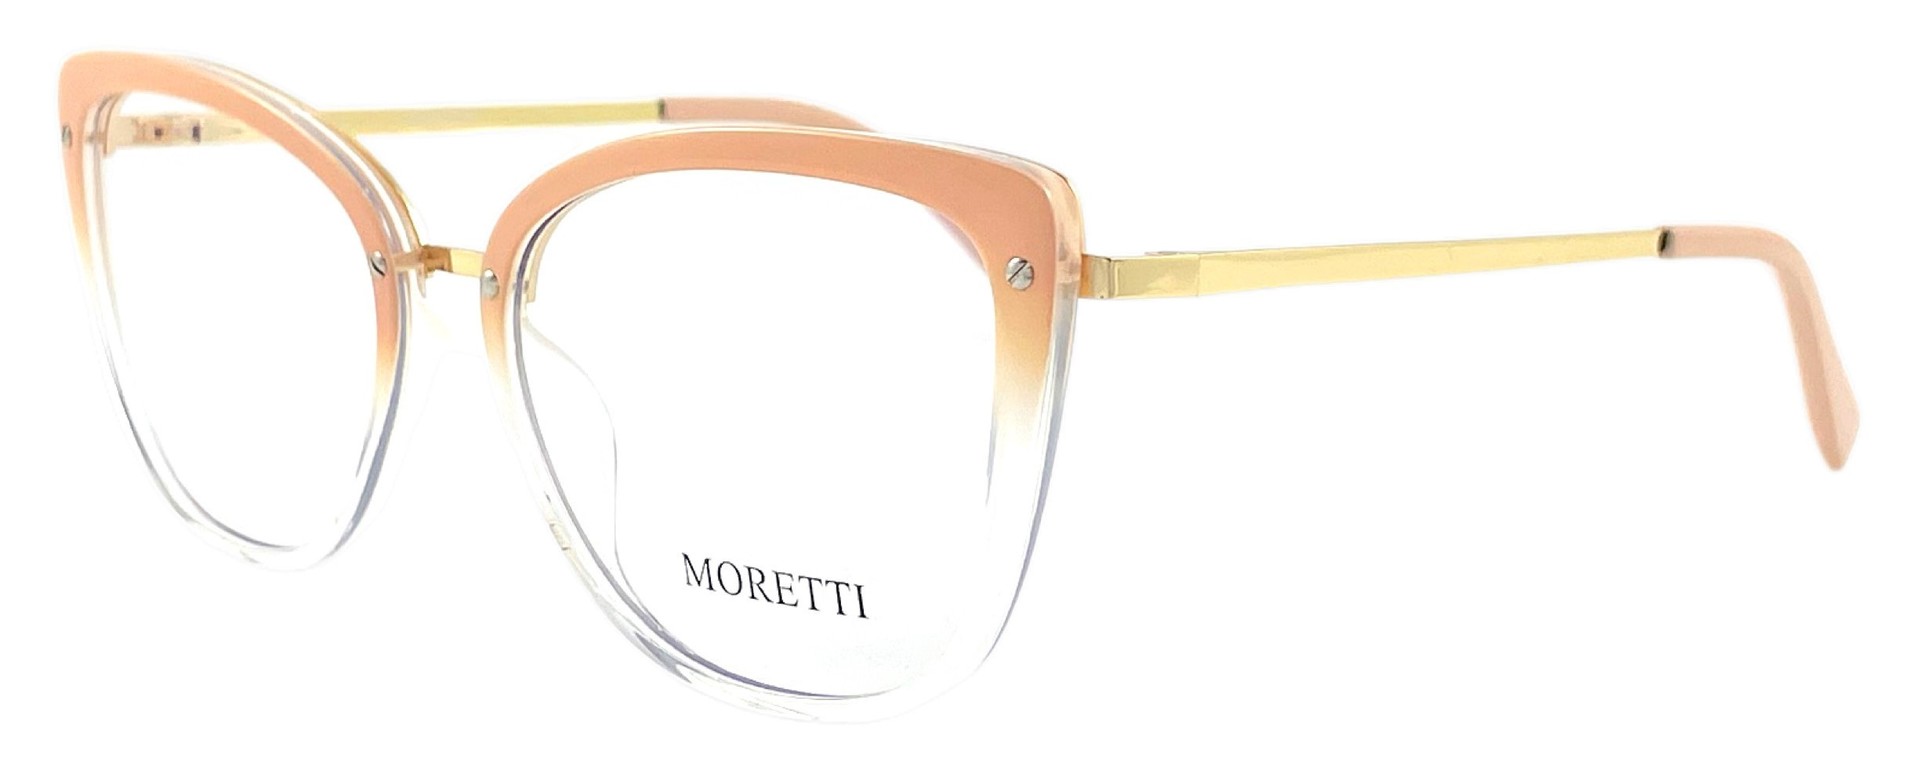 Moretti 2076 C5 2